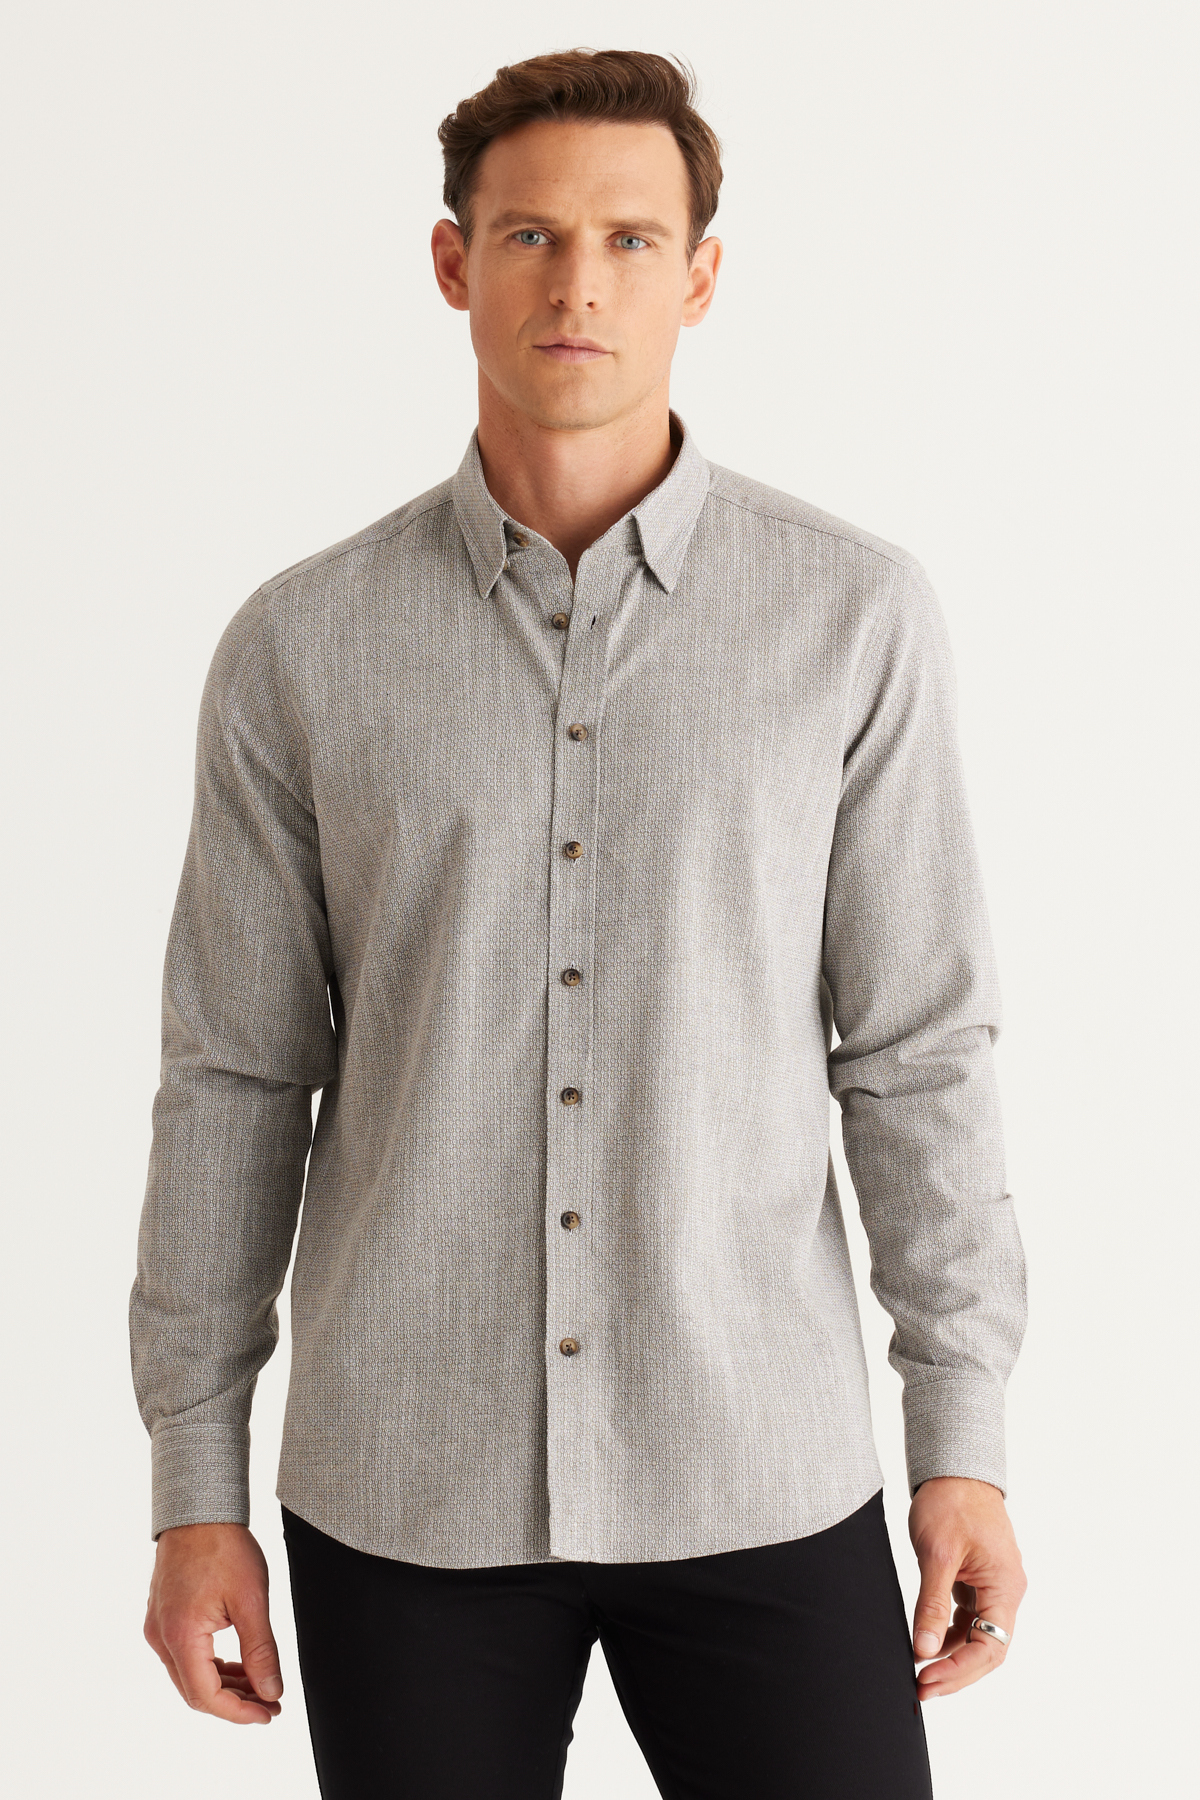 ALTINYILDIZ CLASSICS Men's Khaki Slim Fit Slim Fit Shirt with Concealed Buttons Collar Cotton Dobby Shirt